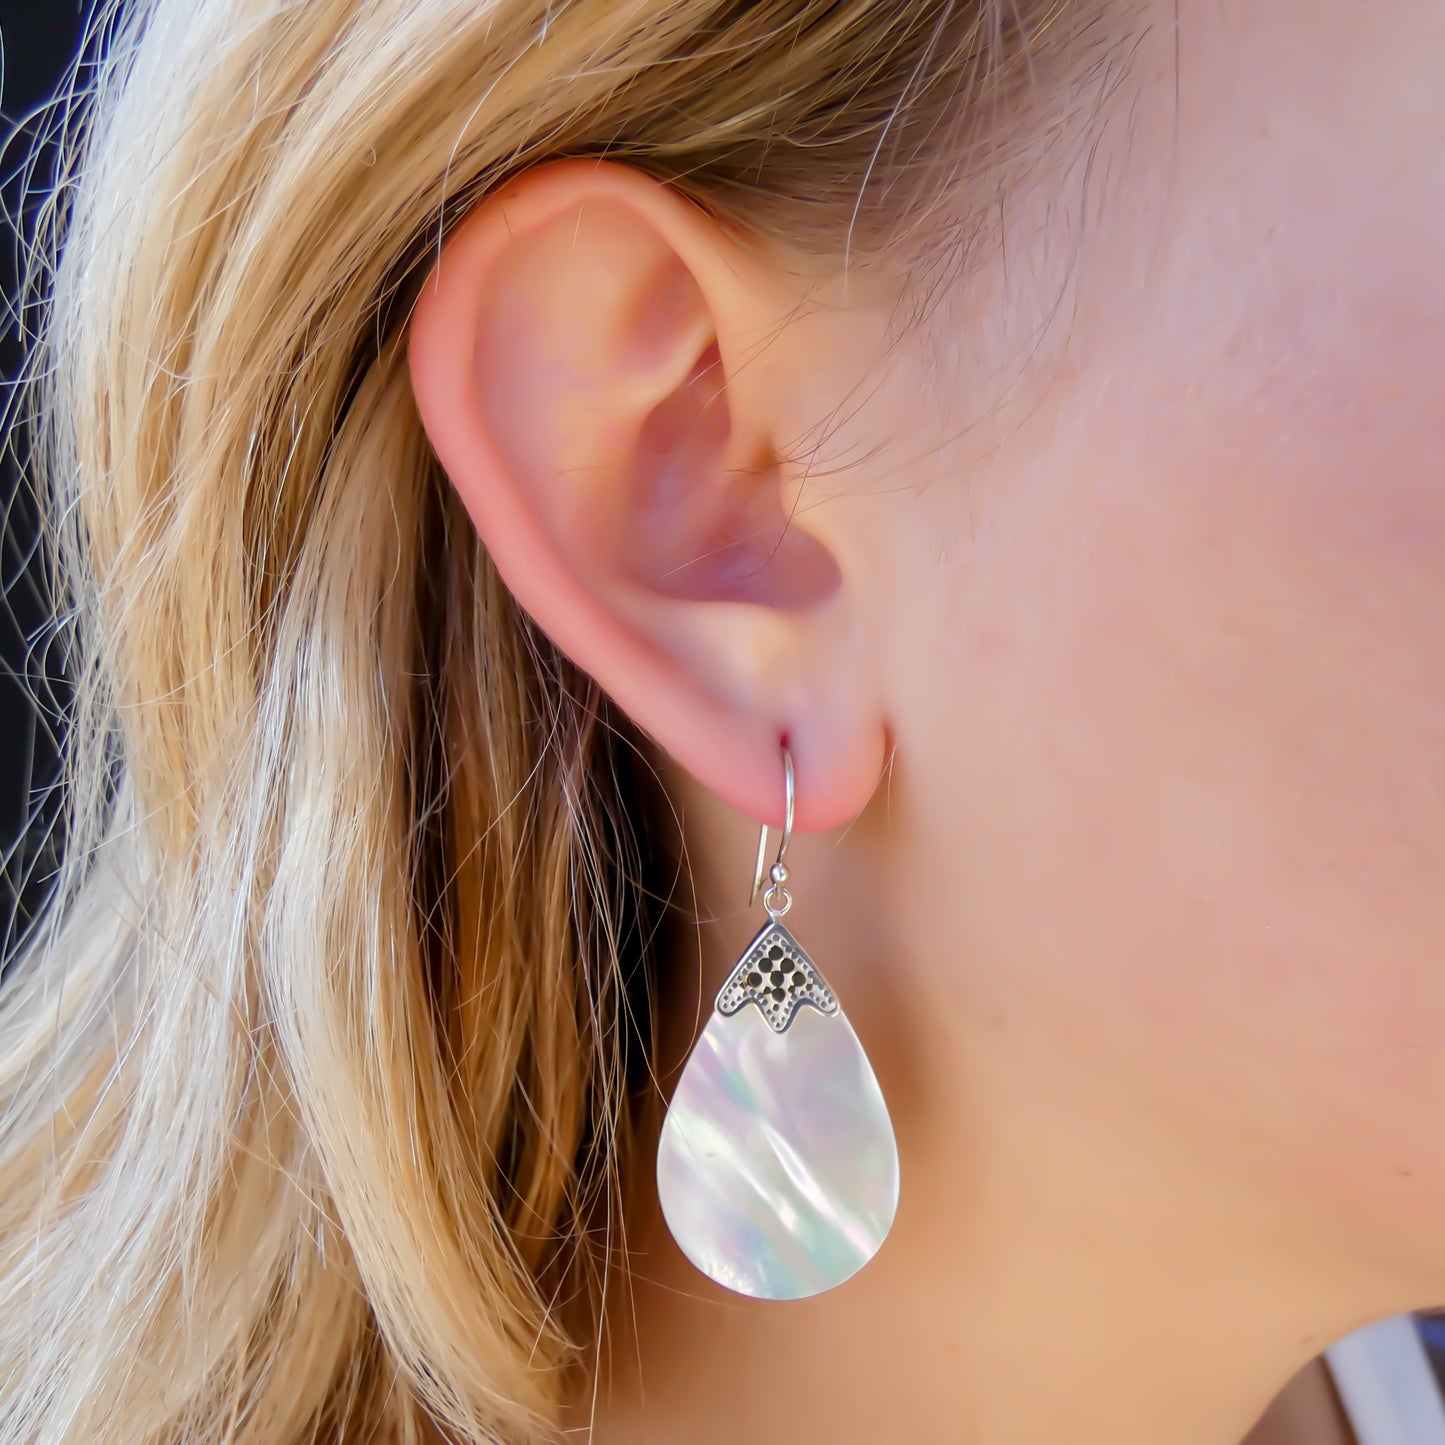 Woman wearing silver earrings with shell drop stones.